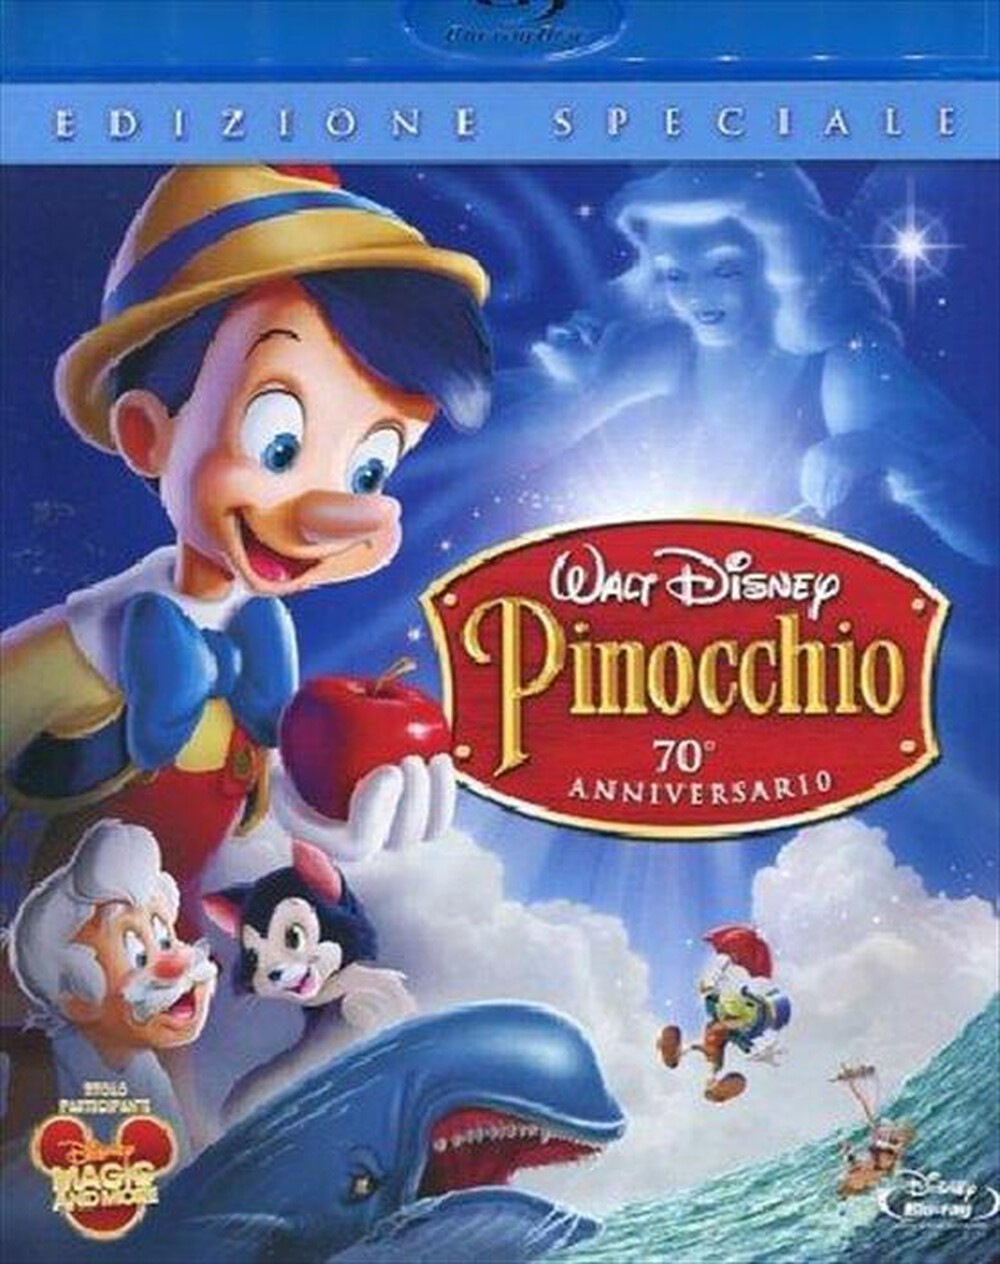 "WALT DISNEY - Pinocchio (SE) - "